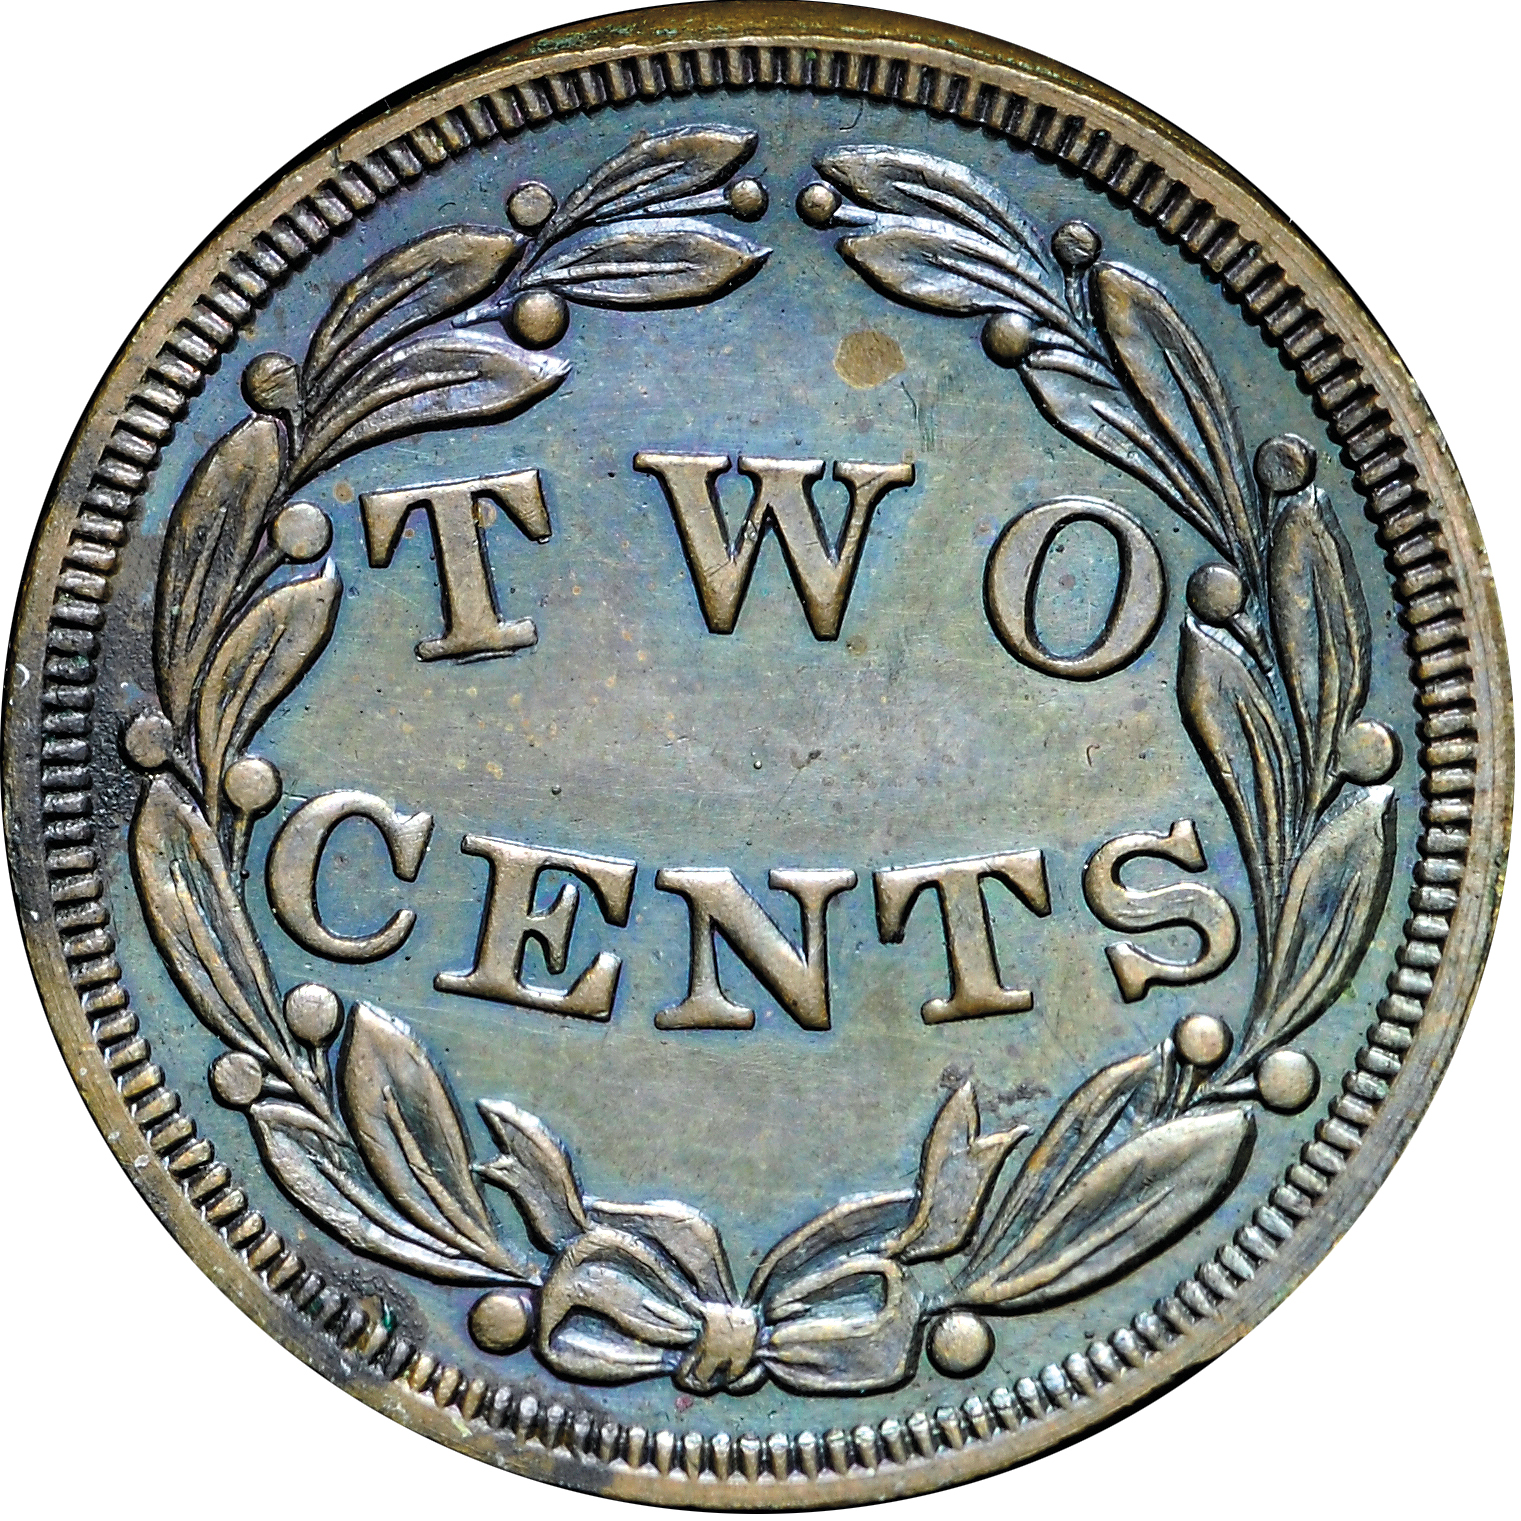 HBCC #6003 – 1836 Two-Cent – Reverse